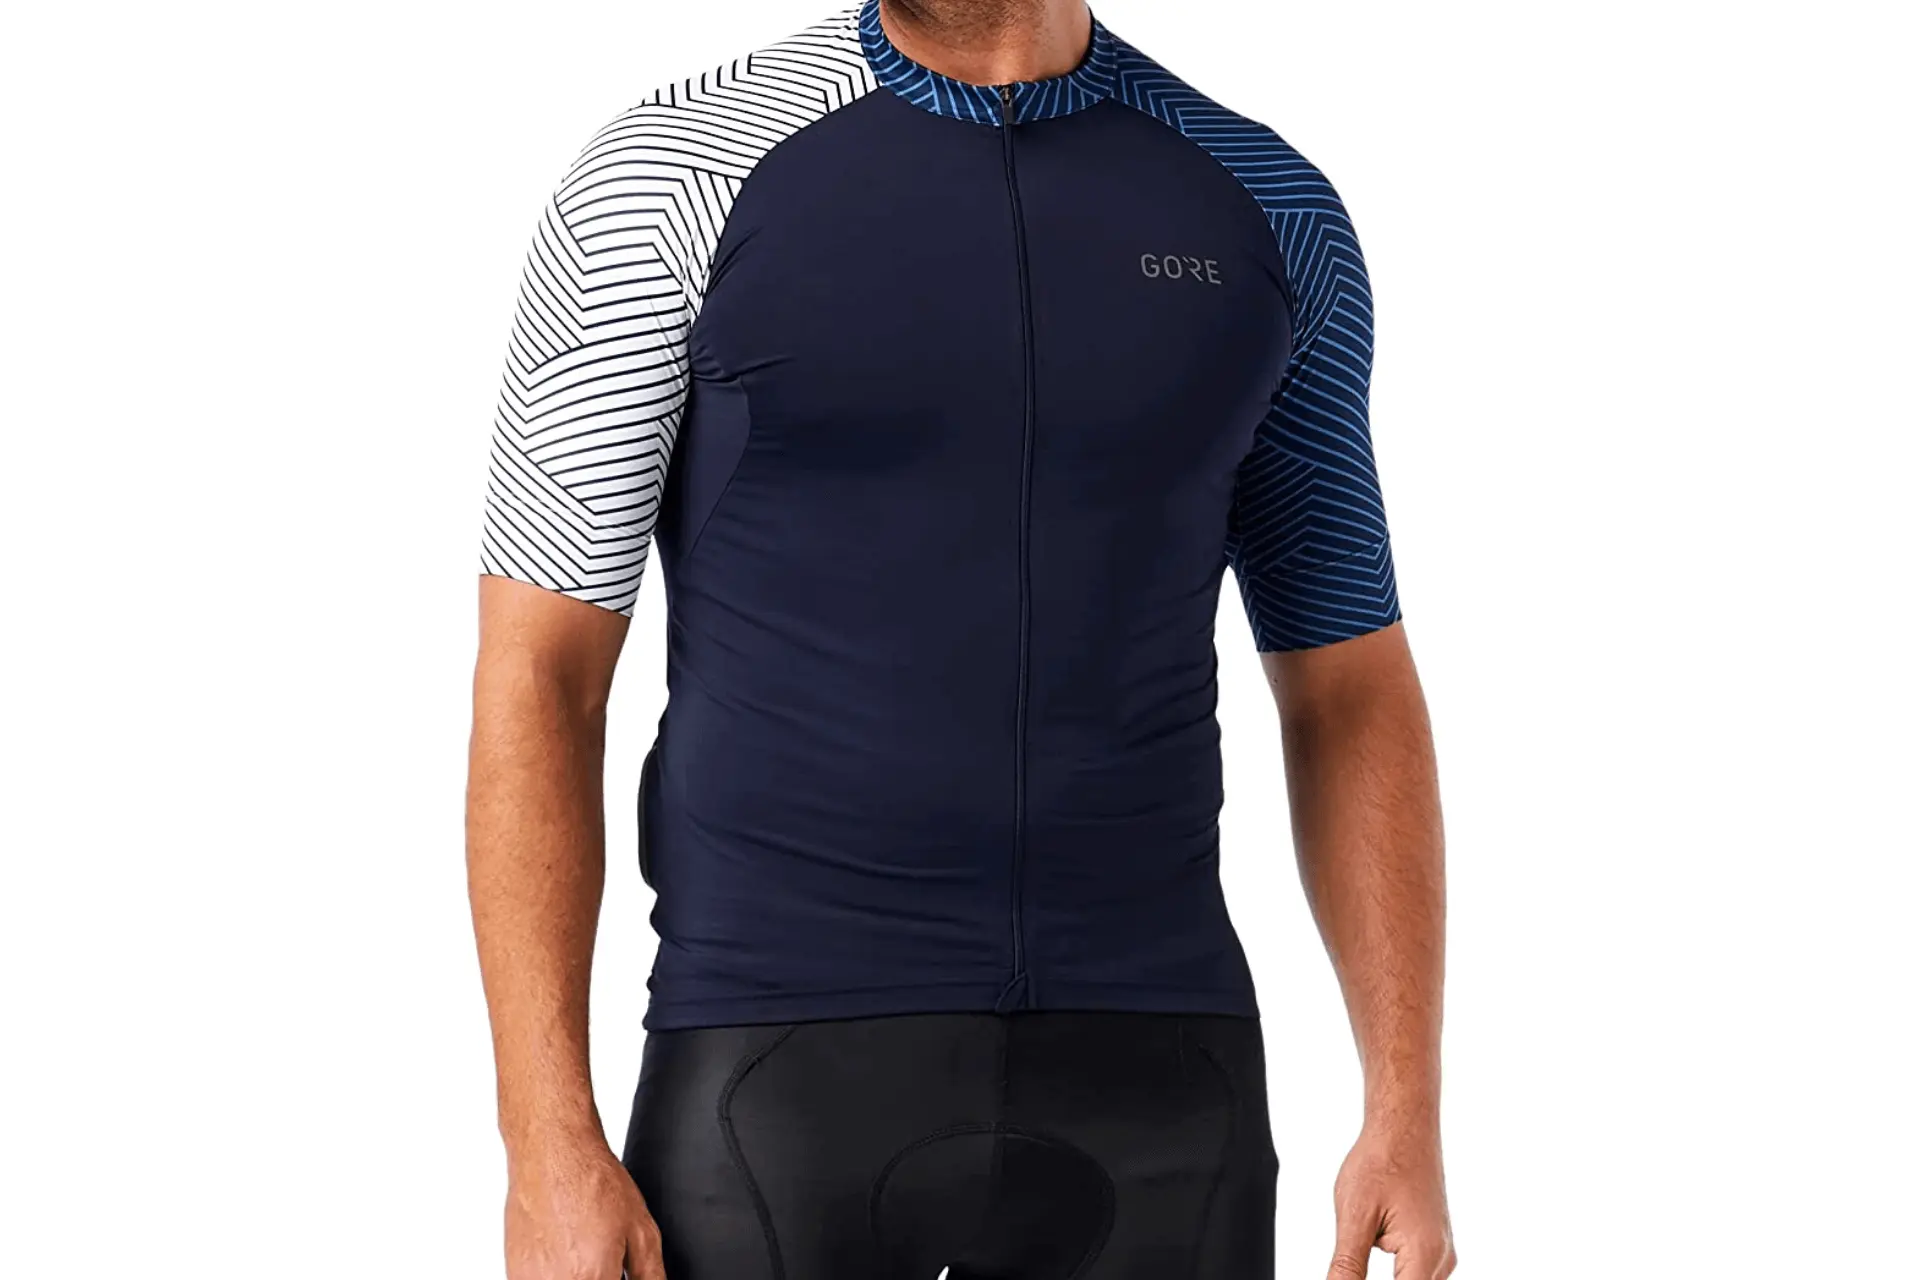 Gore wears a men's cycling jersey